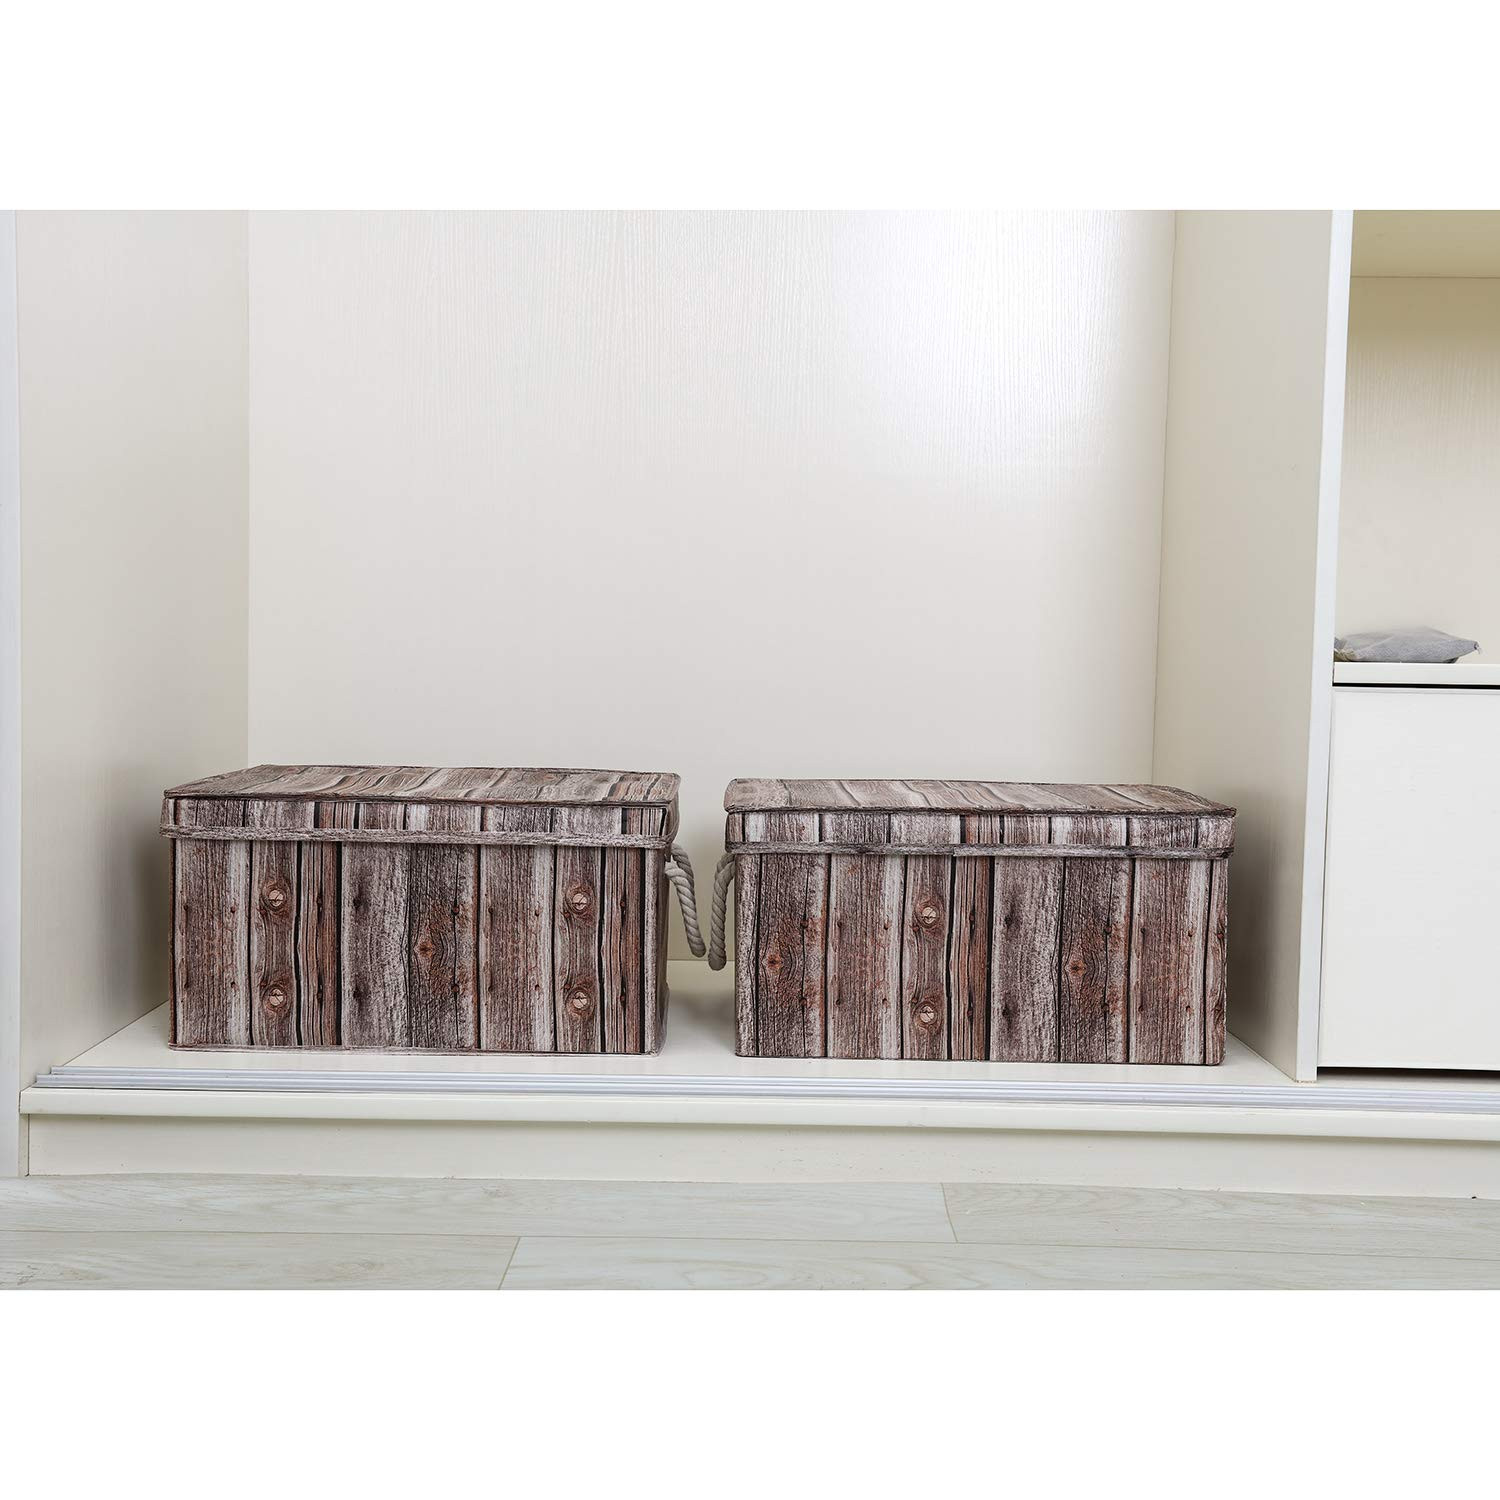 Bedroom Storage Bins
 MaidMAX Basket Fabric Storage Bins with Lids & Handles